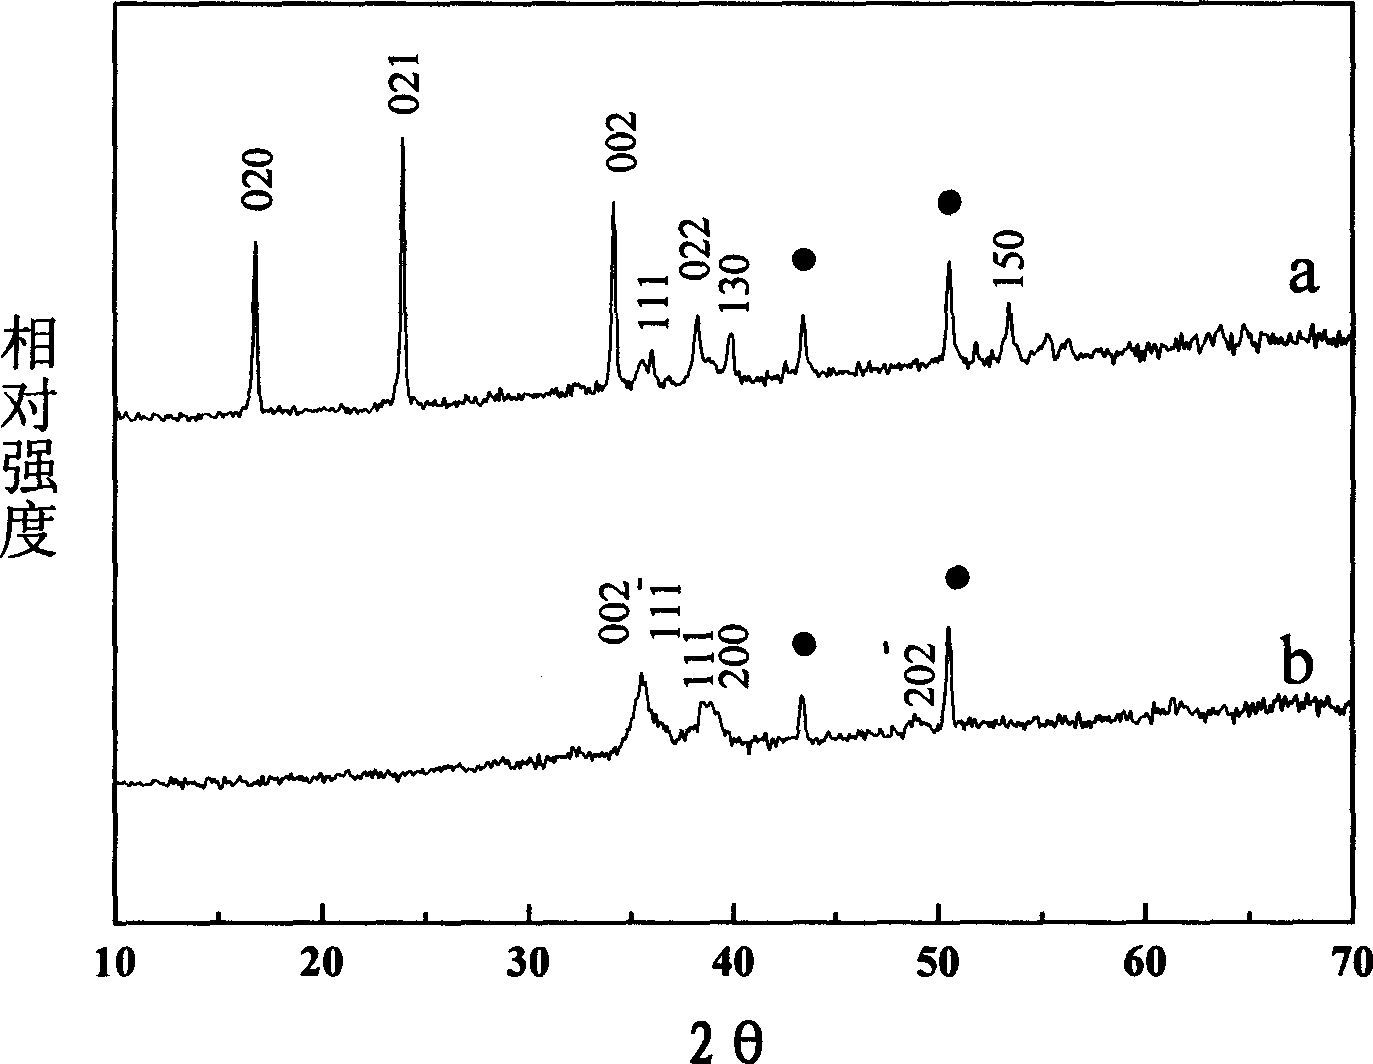 Production of oxide copper nanometer tube array